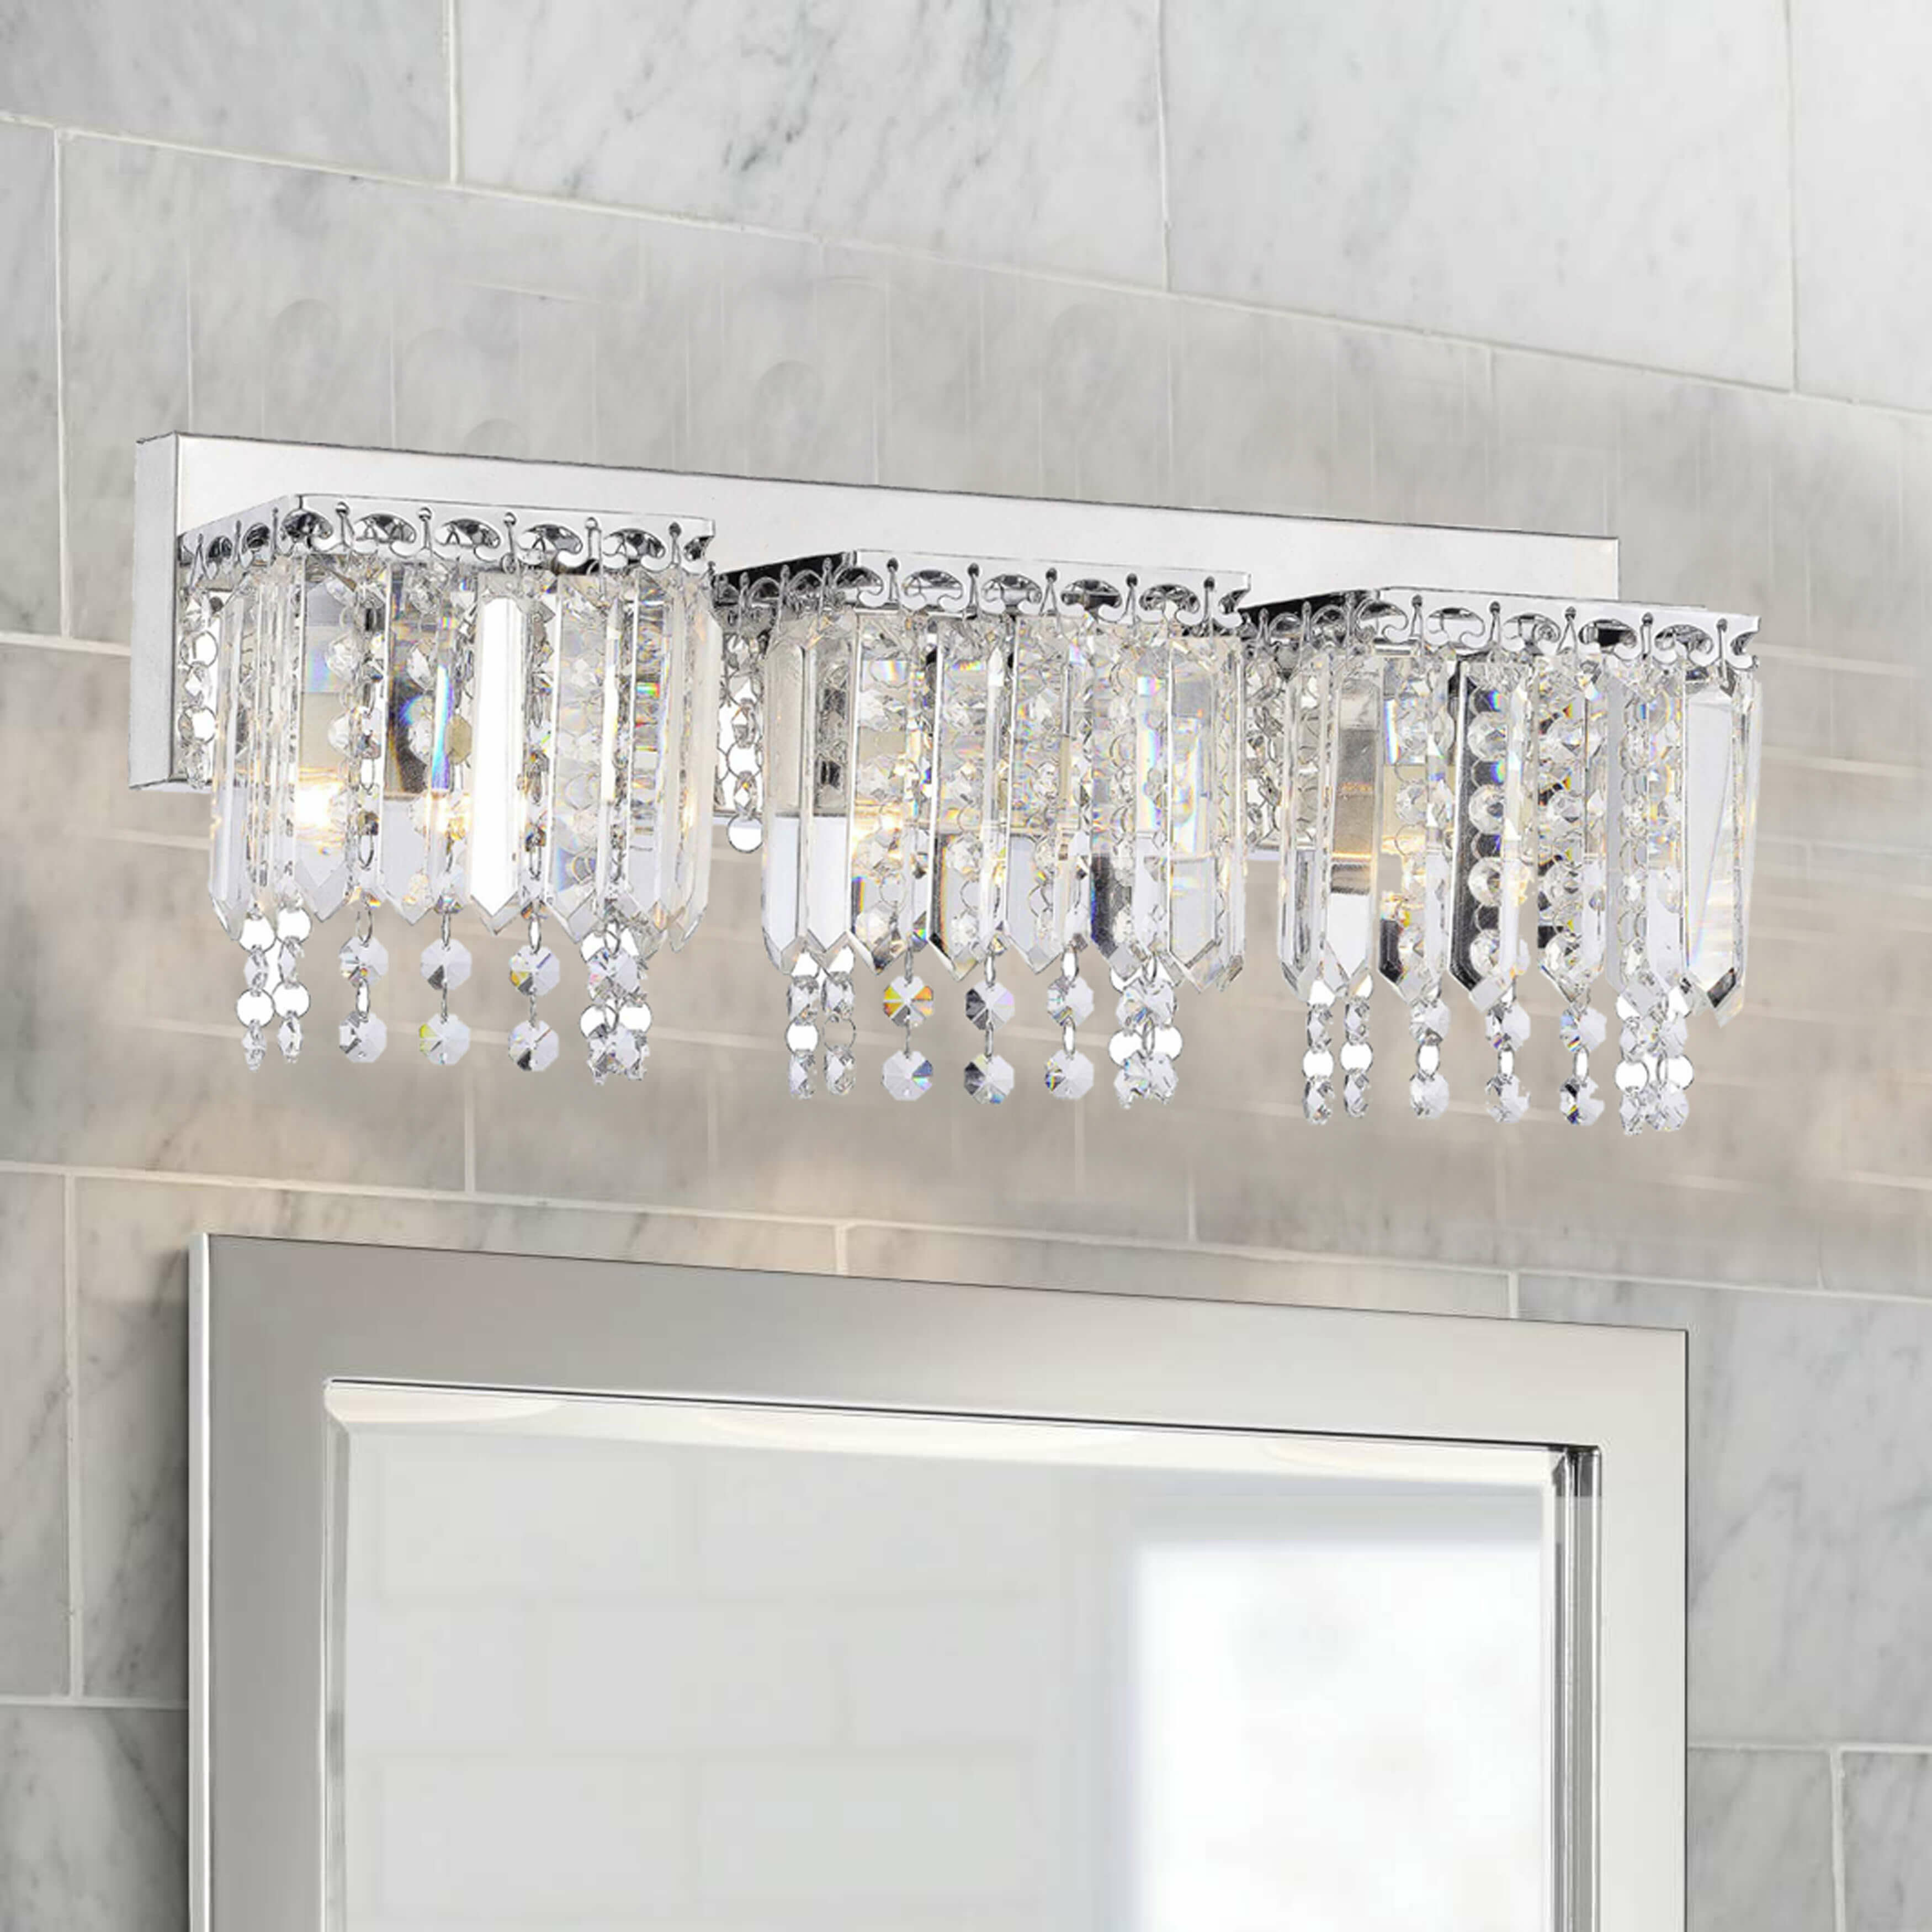 WIHTU 3-Light Crystal Wa LED Bathroom Vanity Light Fixtures Chrome Wall Mounted